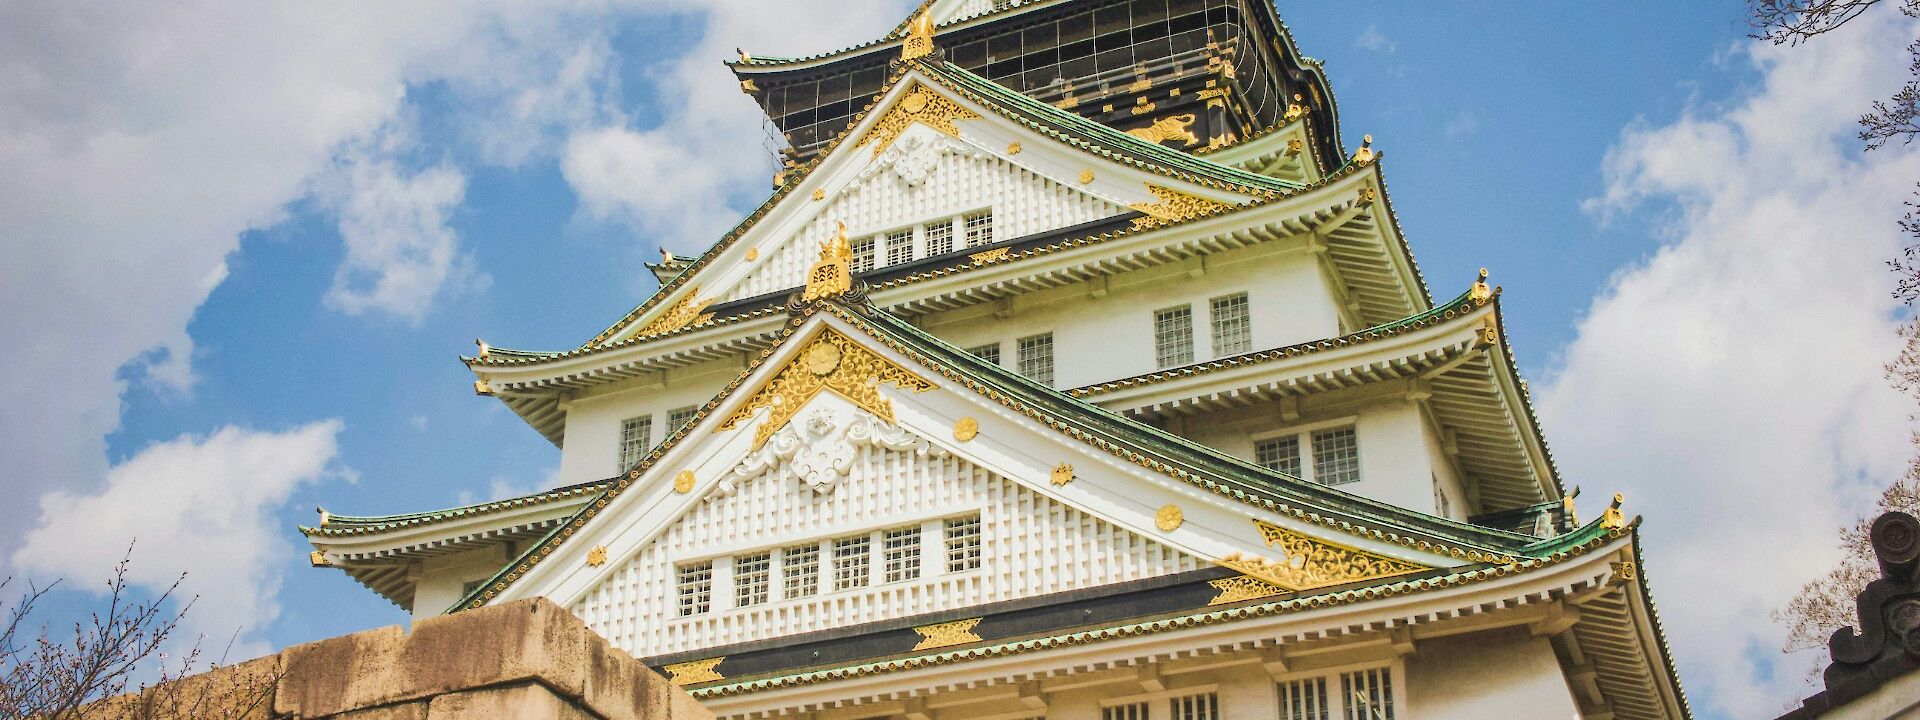 Osaka castle, Japan. Unsplash: Nathan Boadle